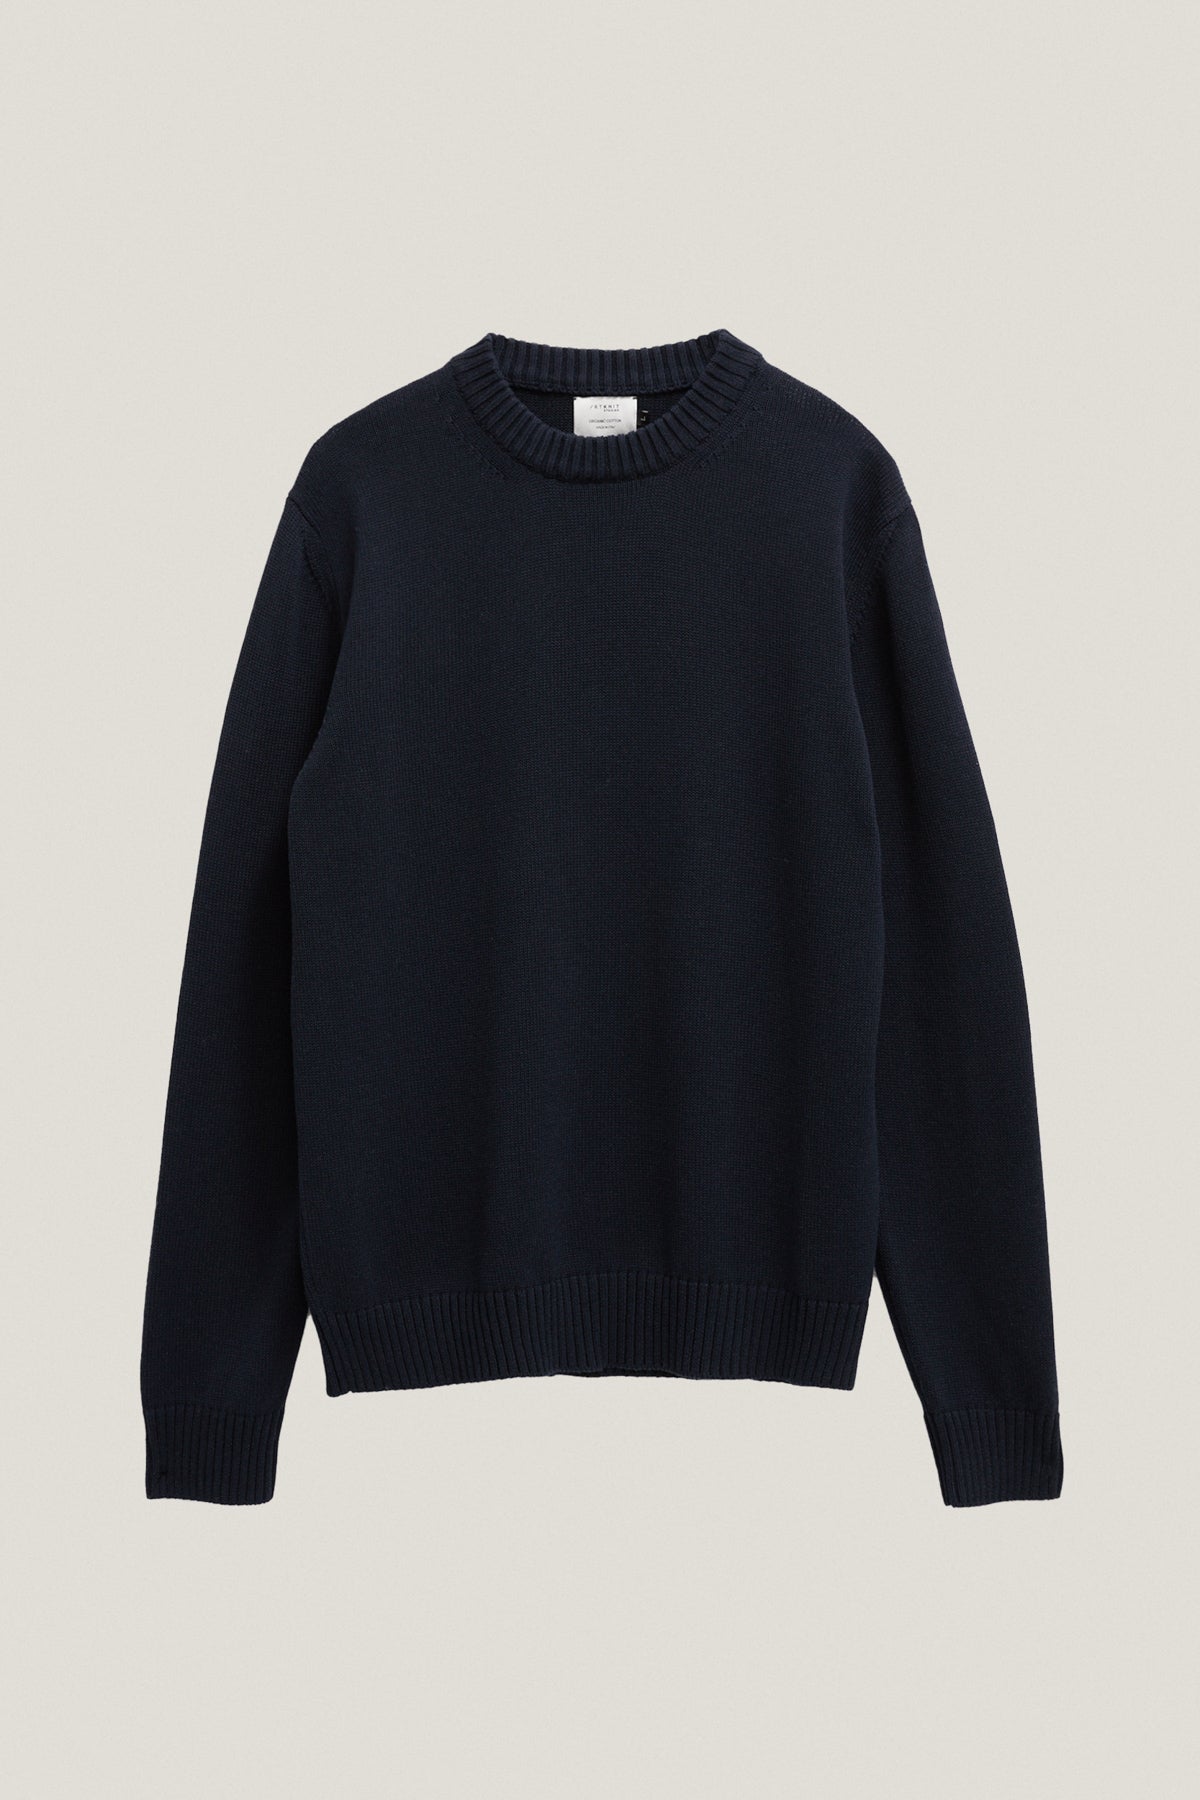 the organic cotton sweater blue navy